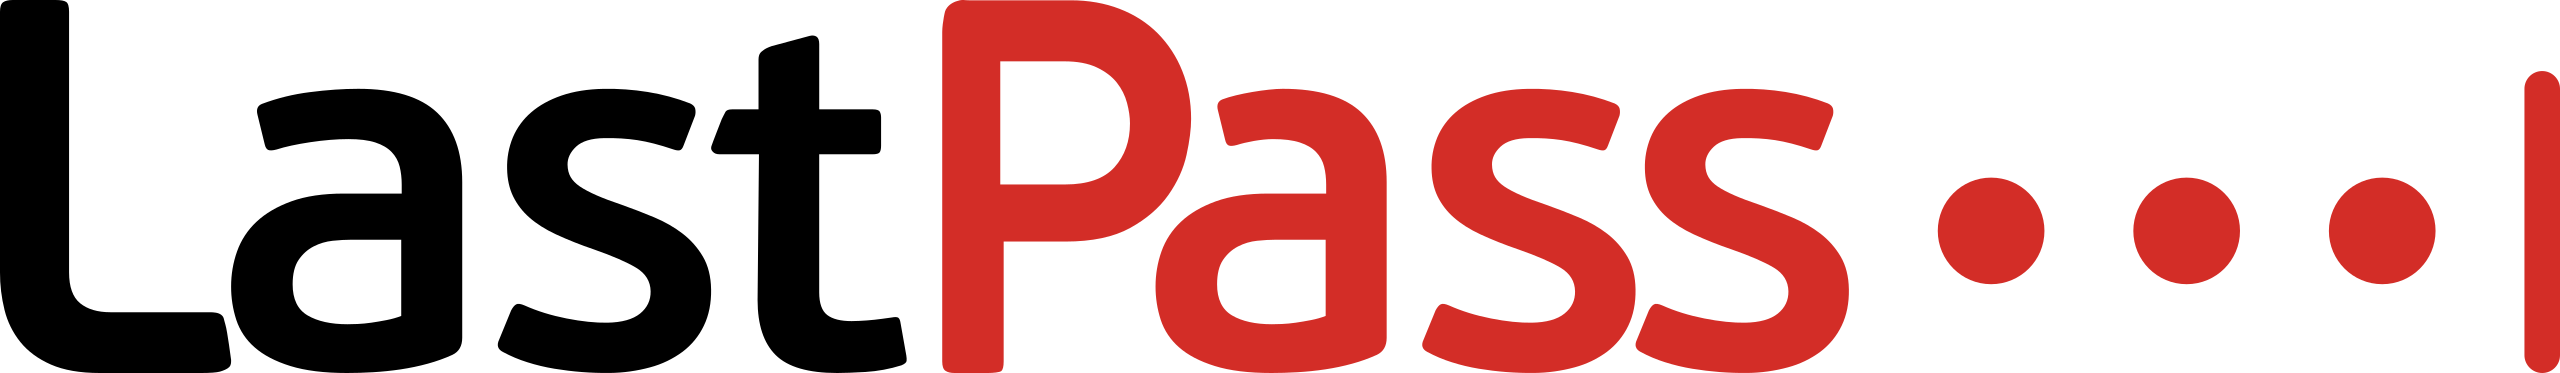 Lastpass-logo